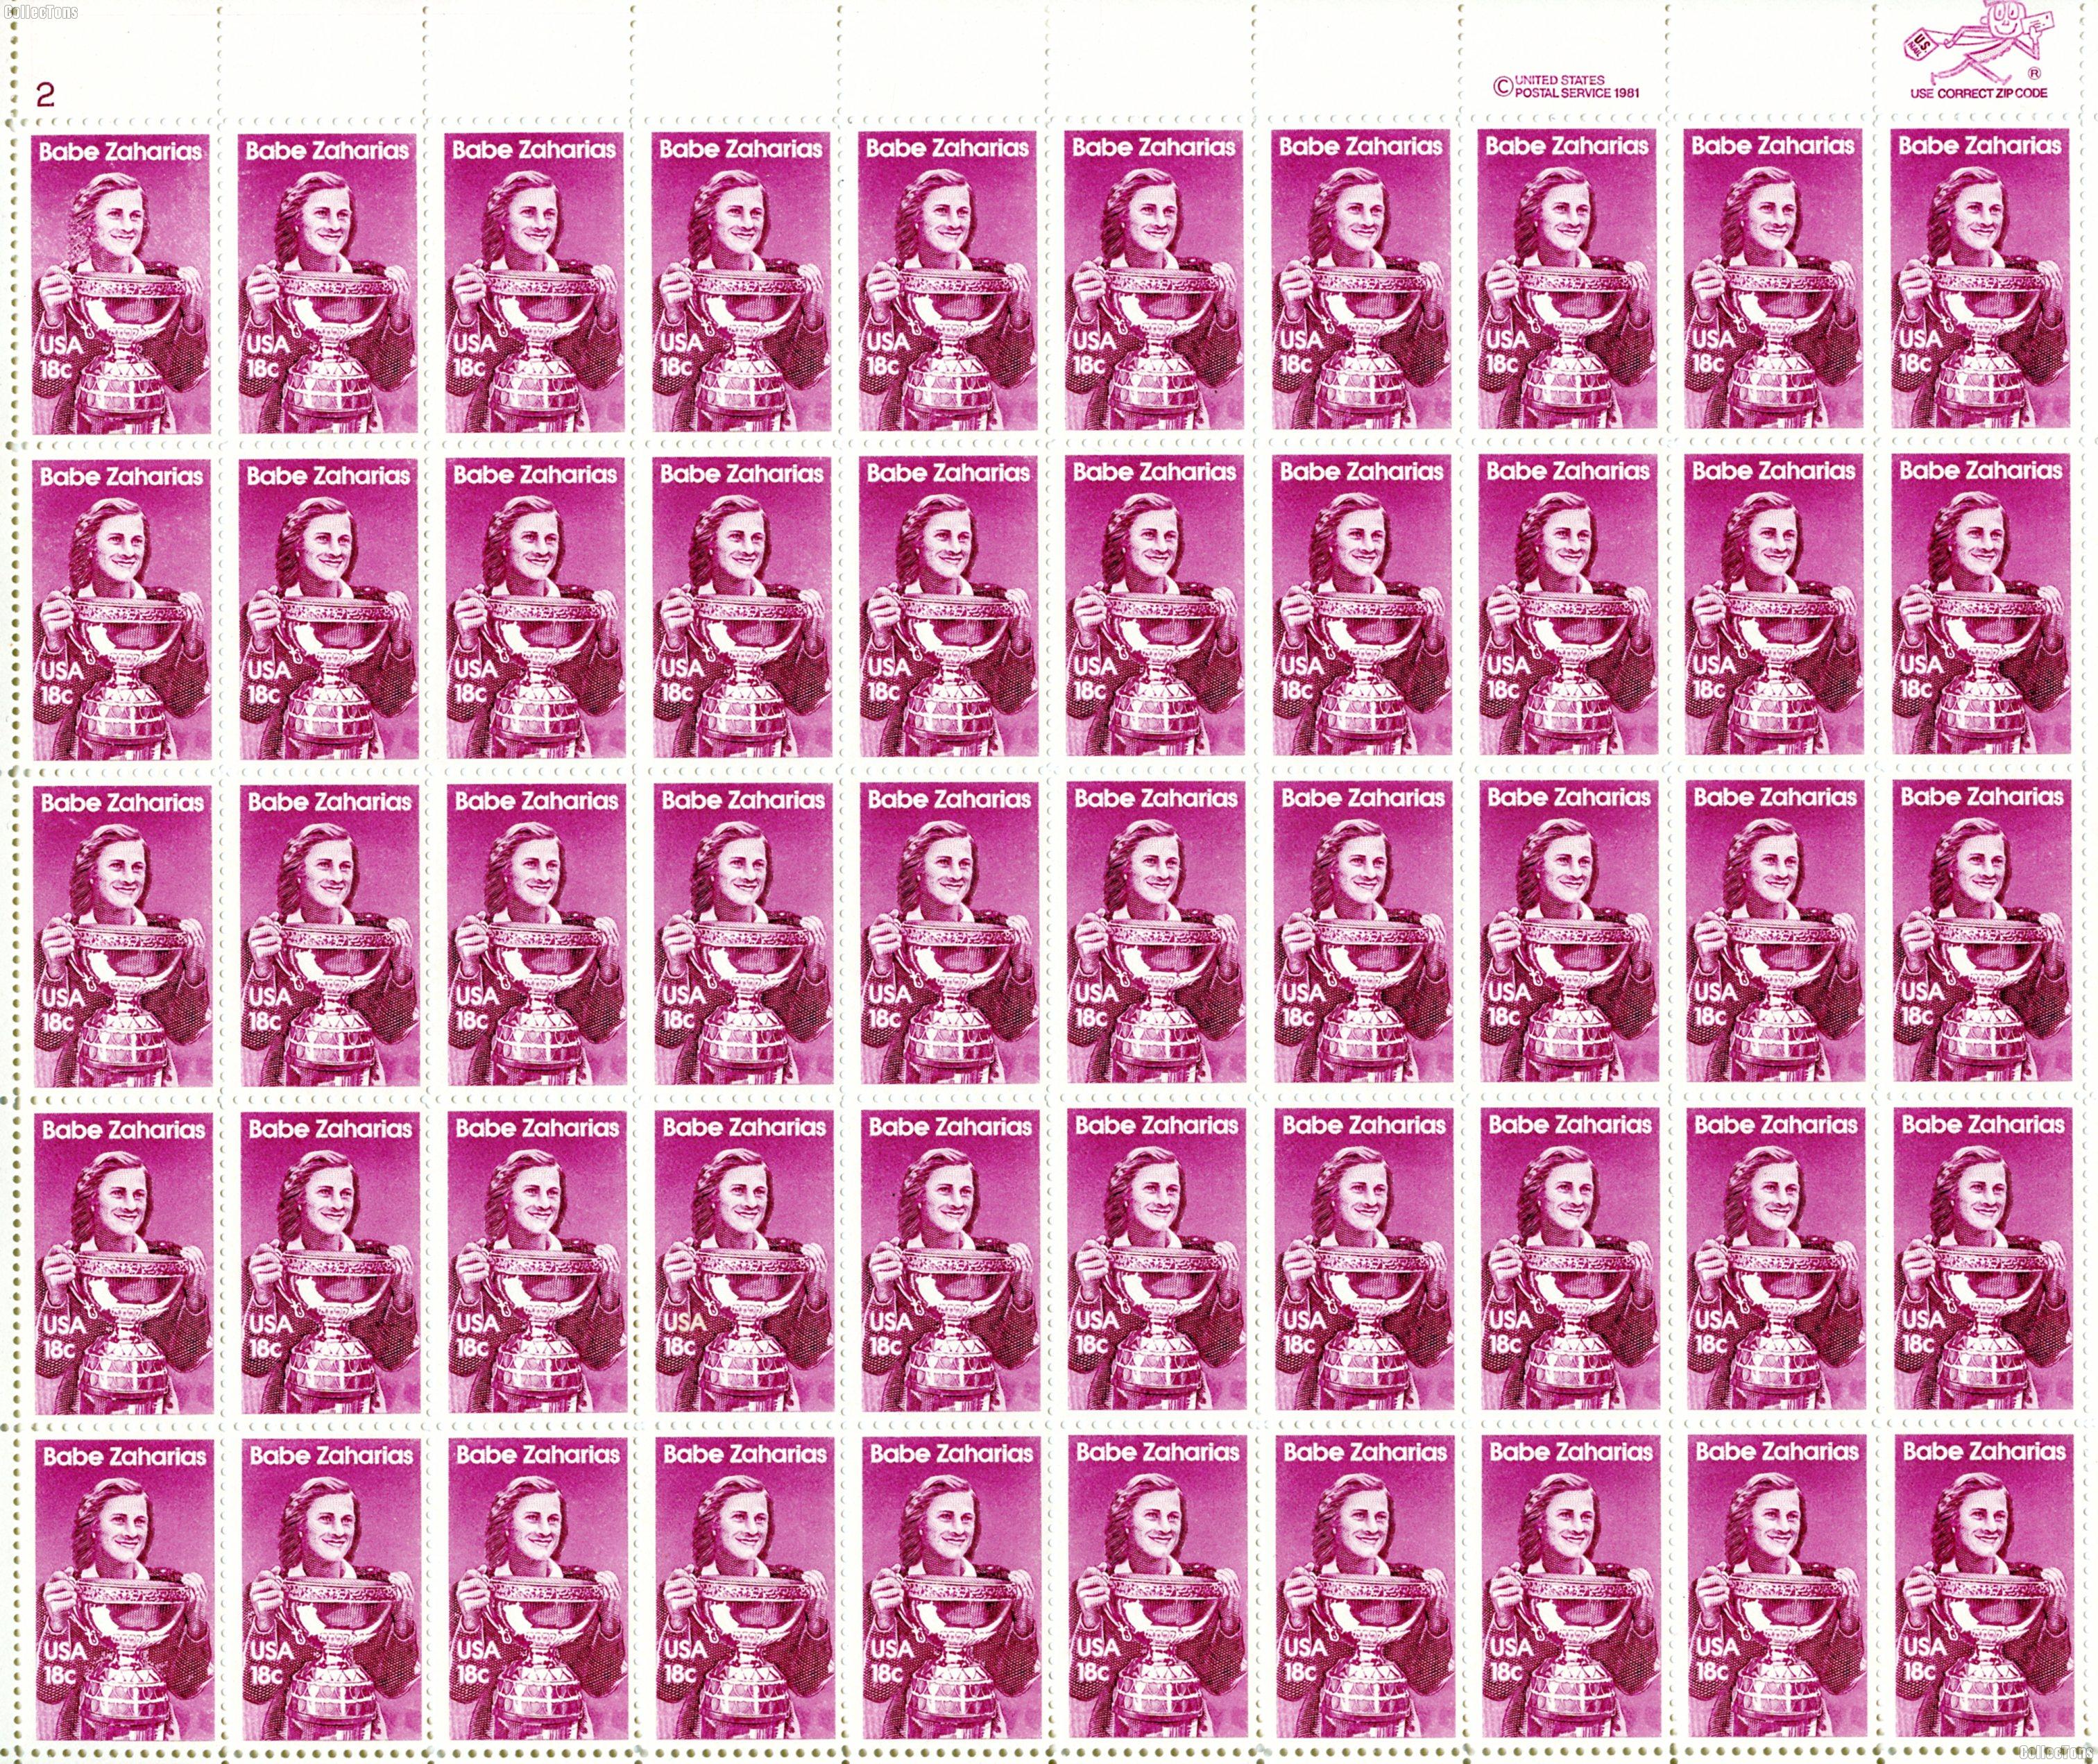 1981 Babe Zaharias 18 Cent US Postage Stamp MNH Sheet of 50 Scott #1932